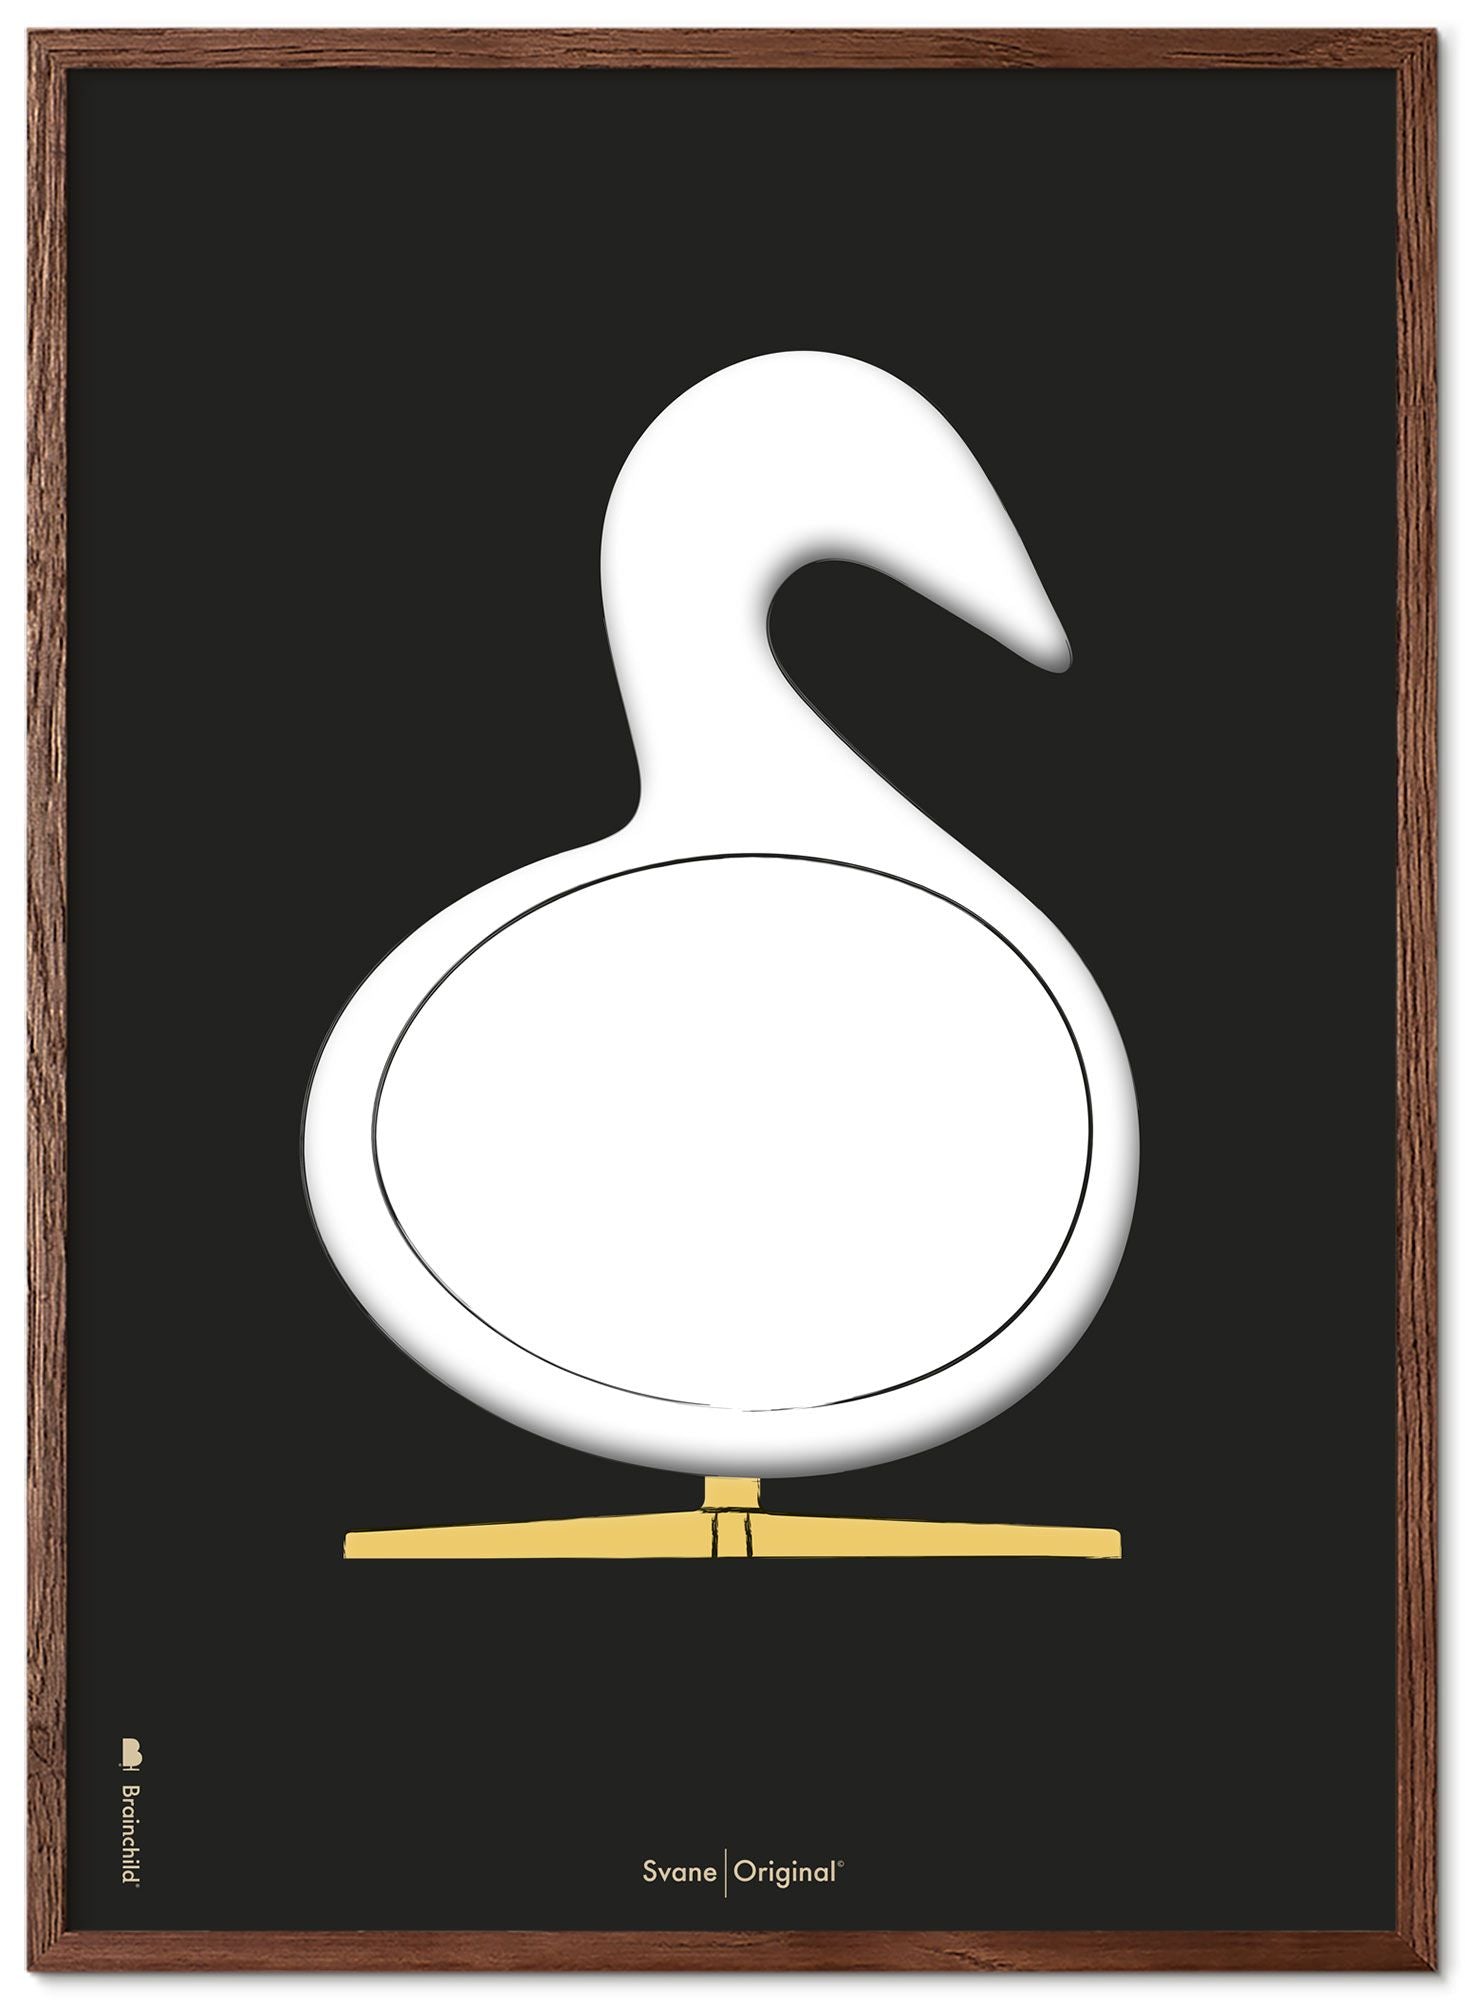 Brainchild Swan Design Sketch Poster Frame Made of Dark Wood A5, Black Bakgrund